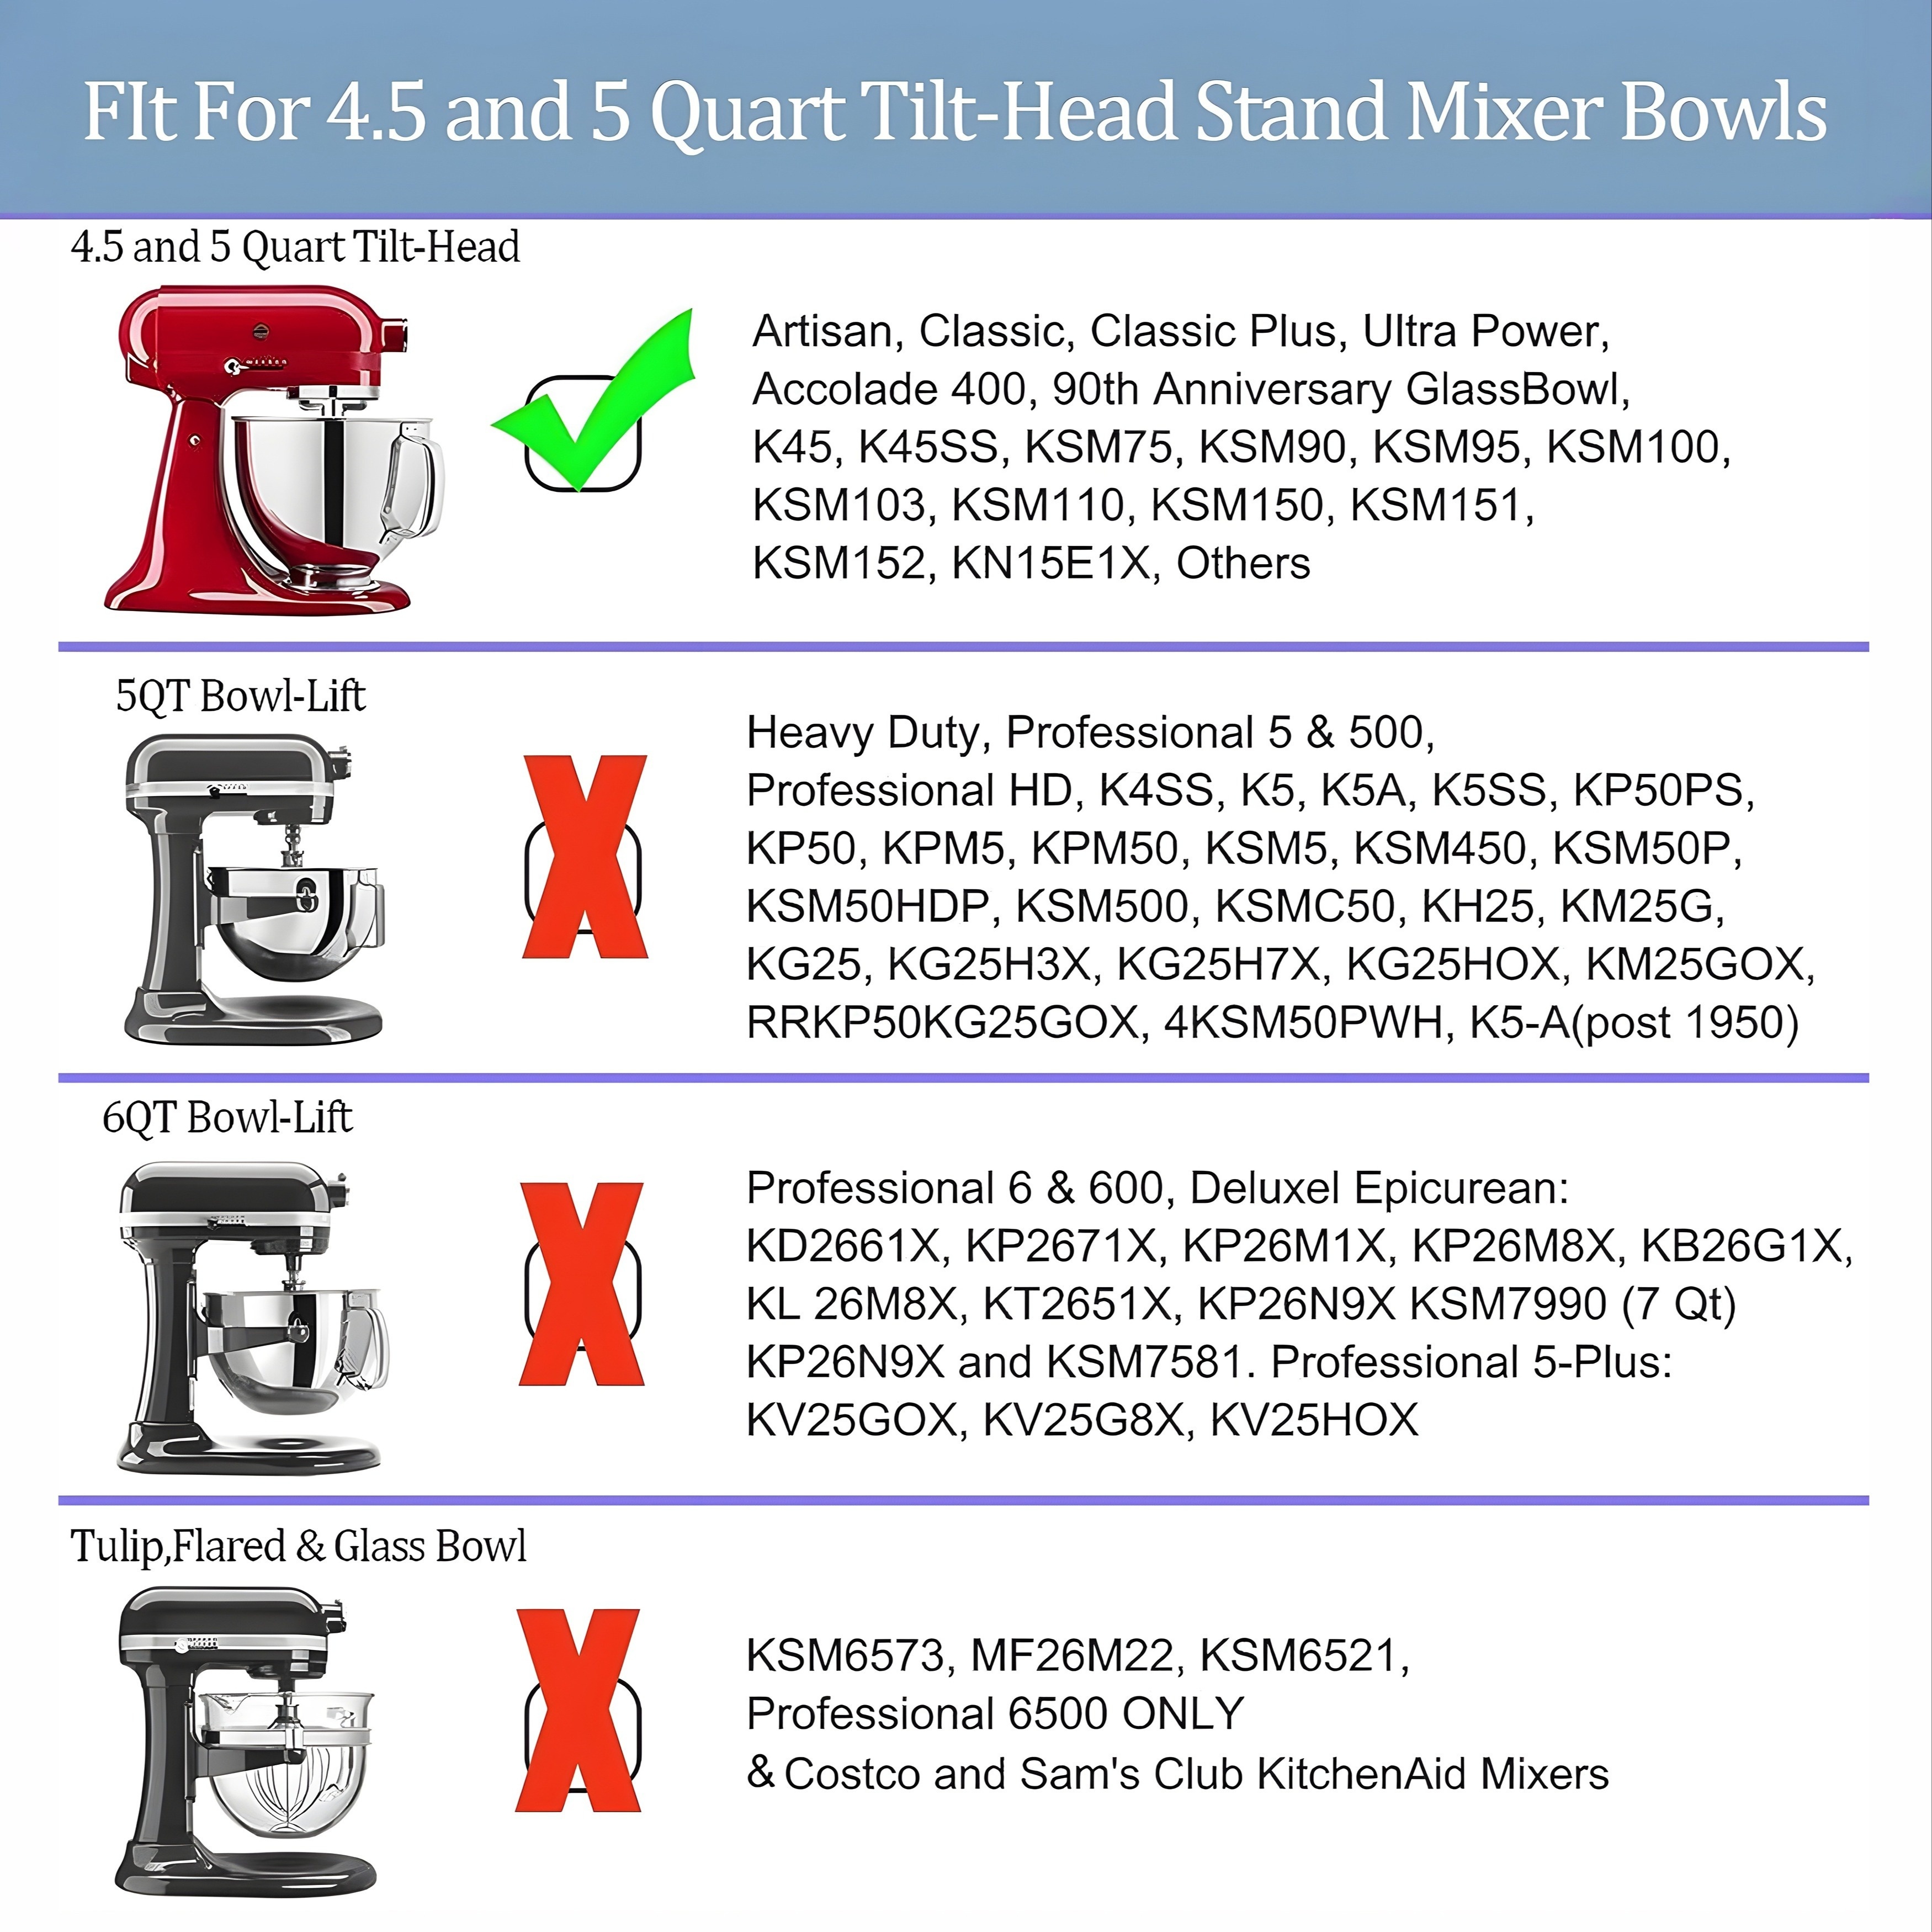 Flex Edge Beater for KitchenAid Tilt-Head Stand Mixer 4.5-5 Quart Flat Beater Paddle with Flexible Silicone Edges Bowl Scraper